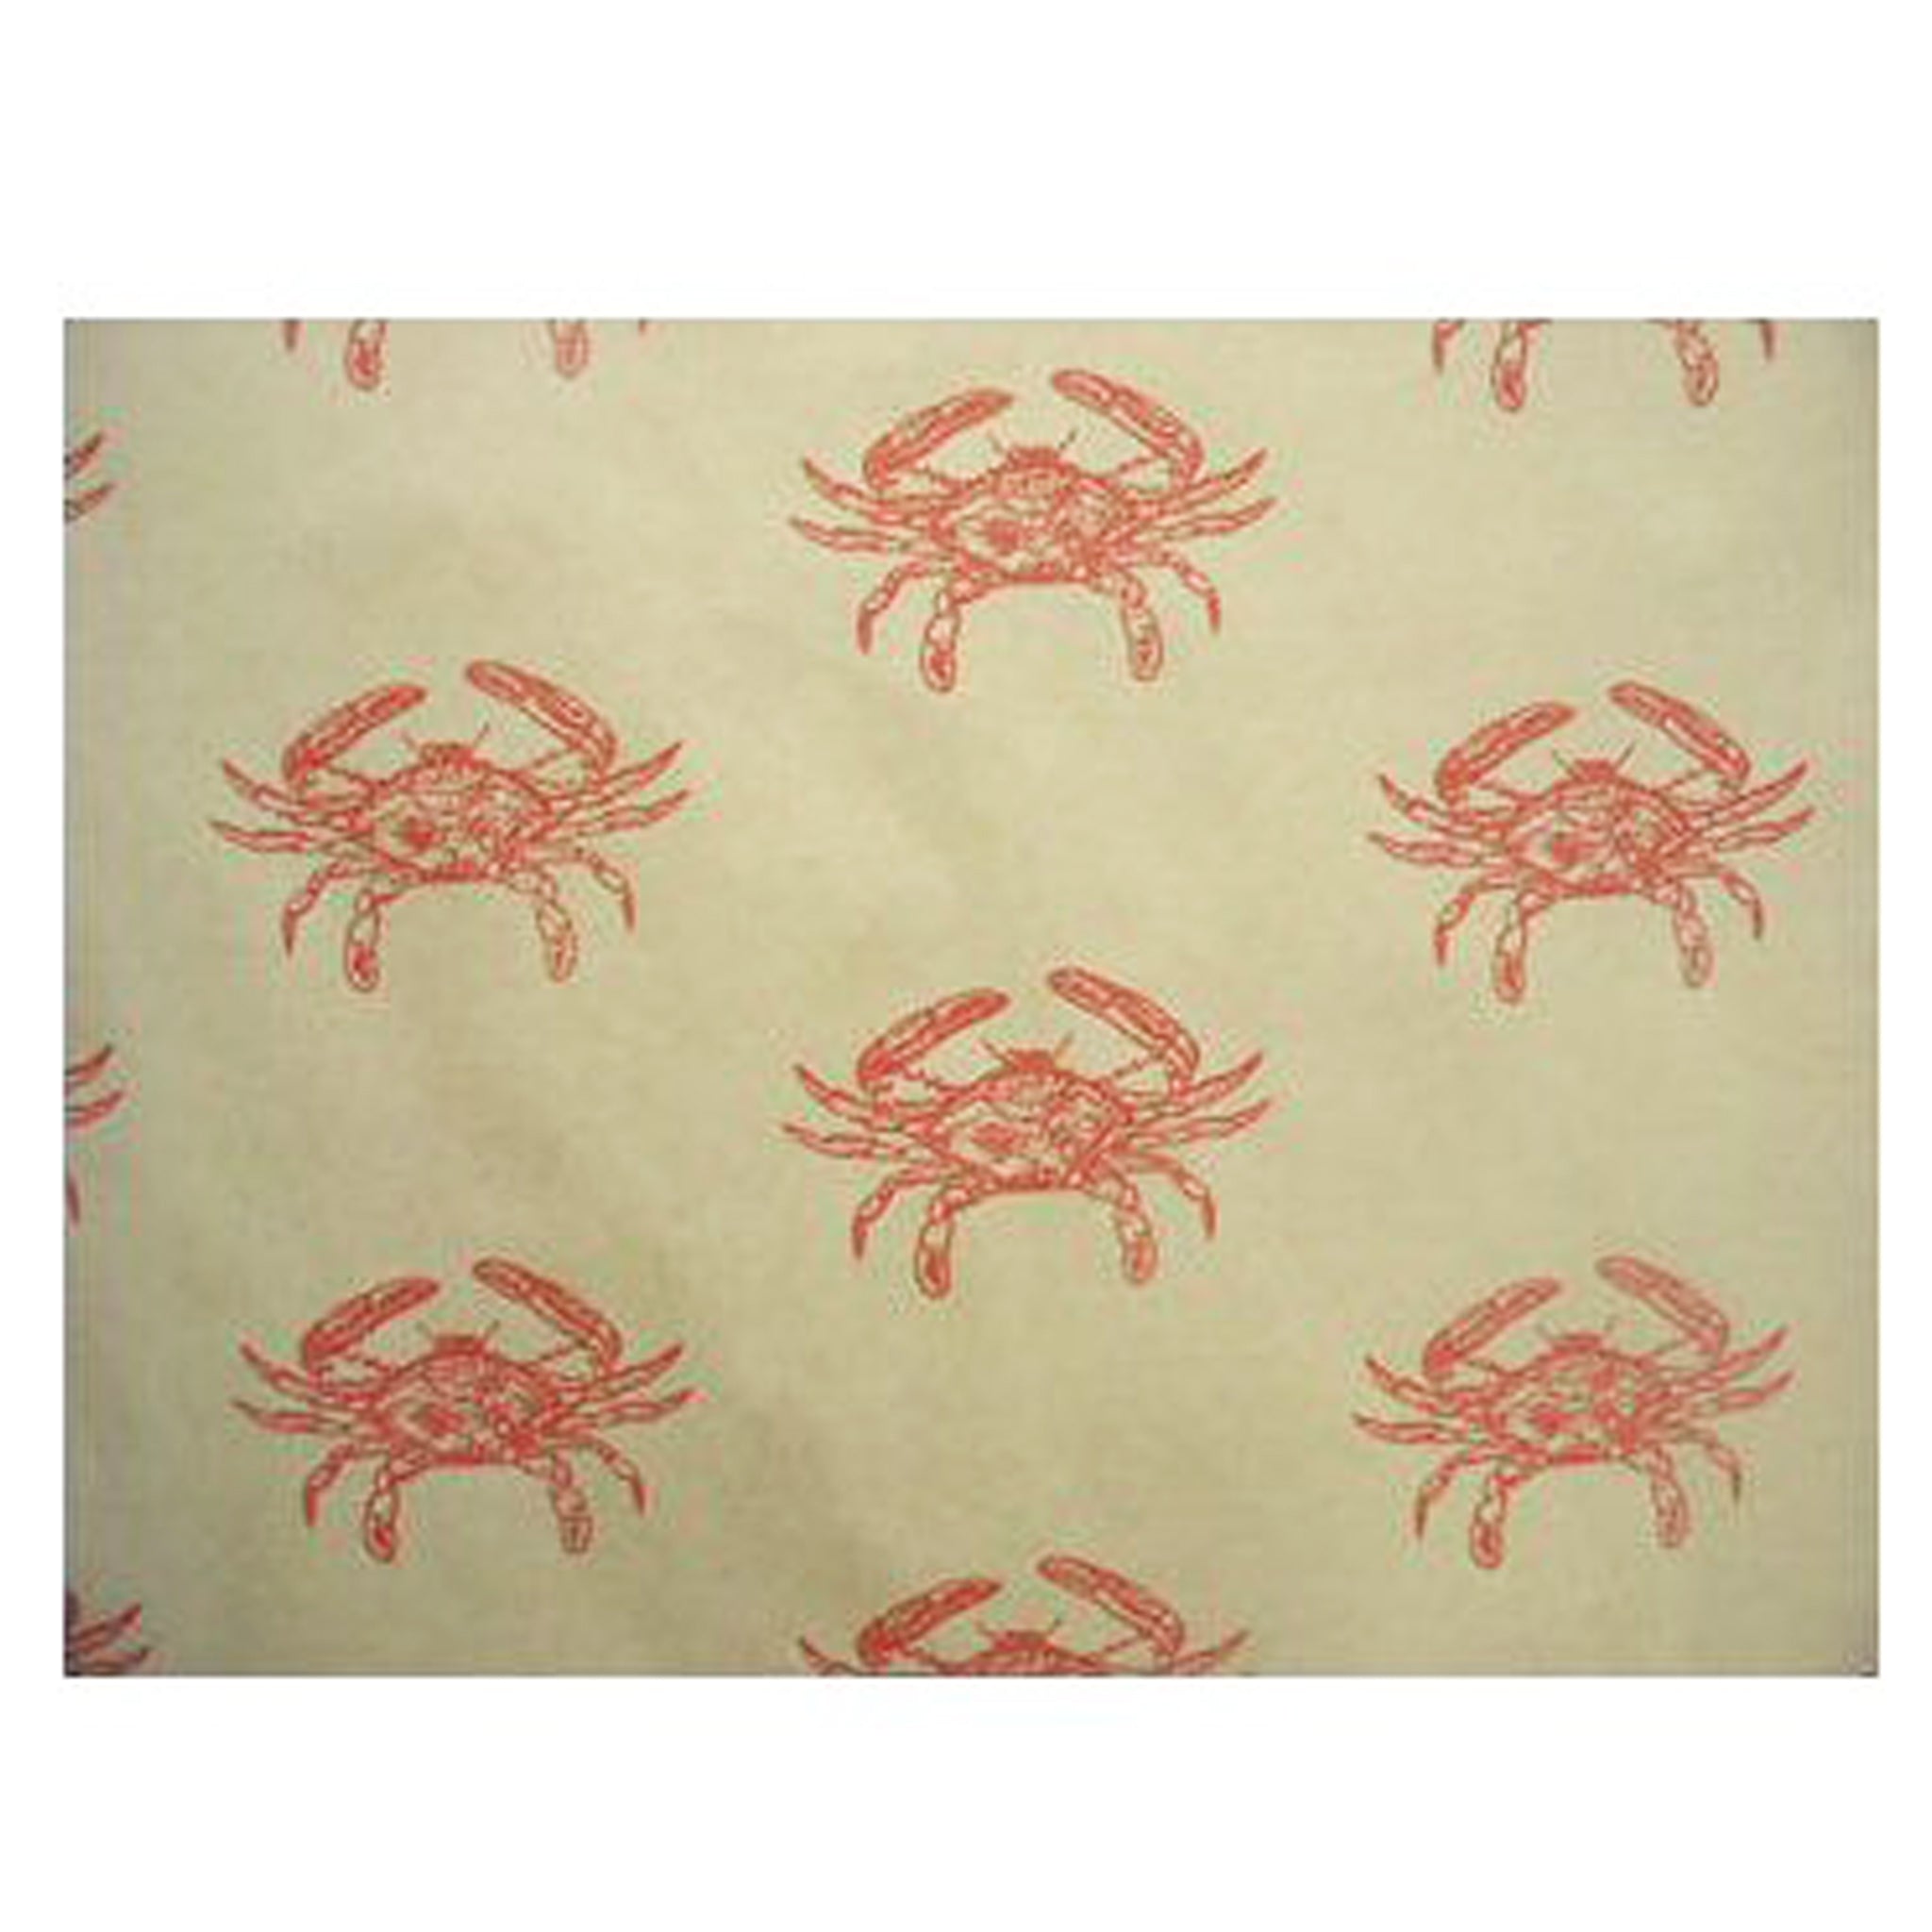  Bundle of 3 - Crab Tea Infuser, Crab N' Roll Paper